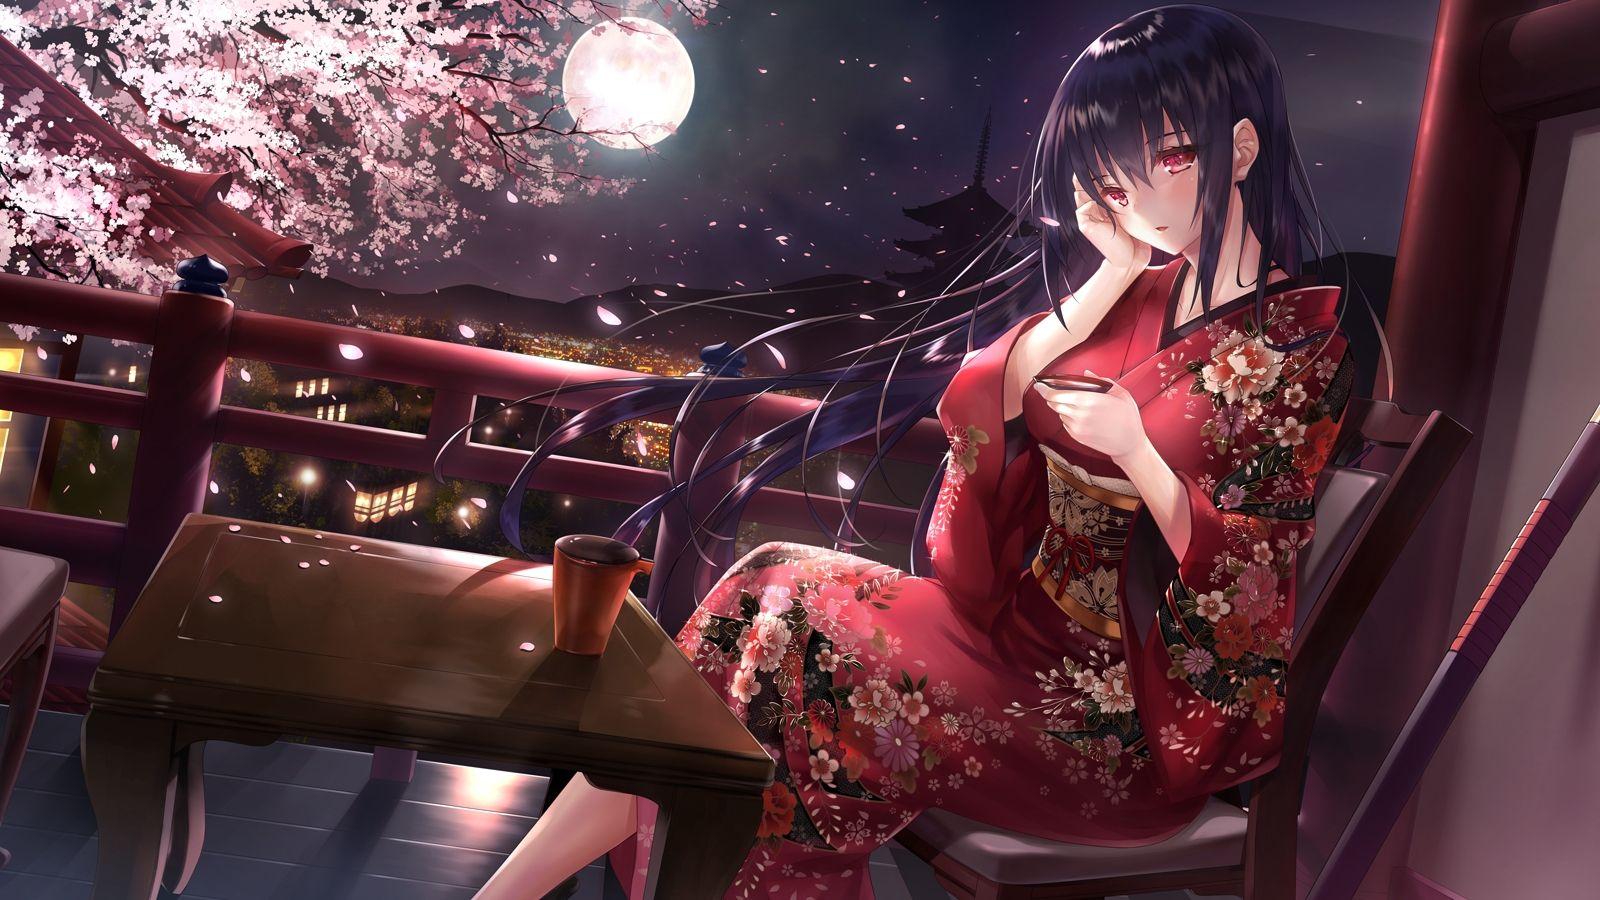 Wallpaper Anime Girl, Kimono, Moon, Sakura Tree, Scenic, Traditional